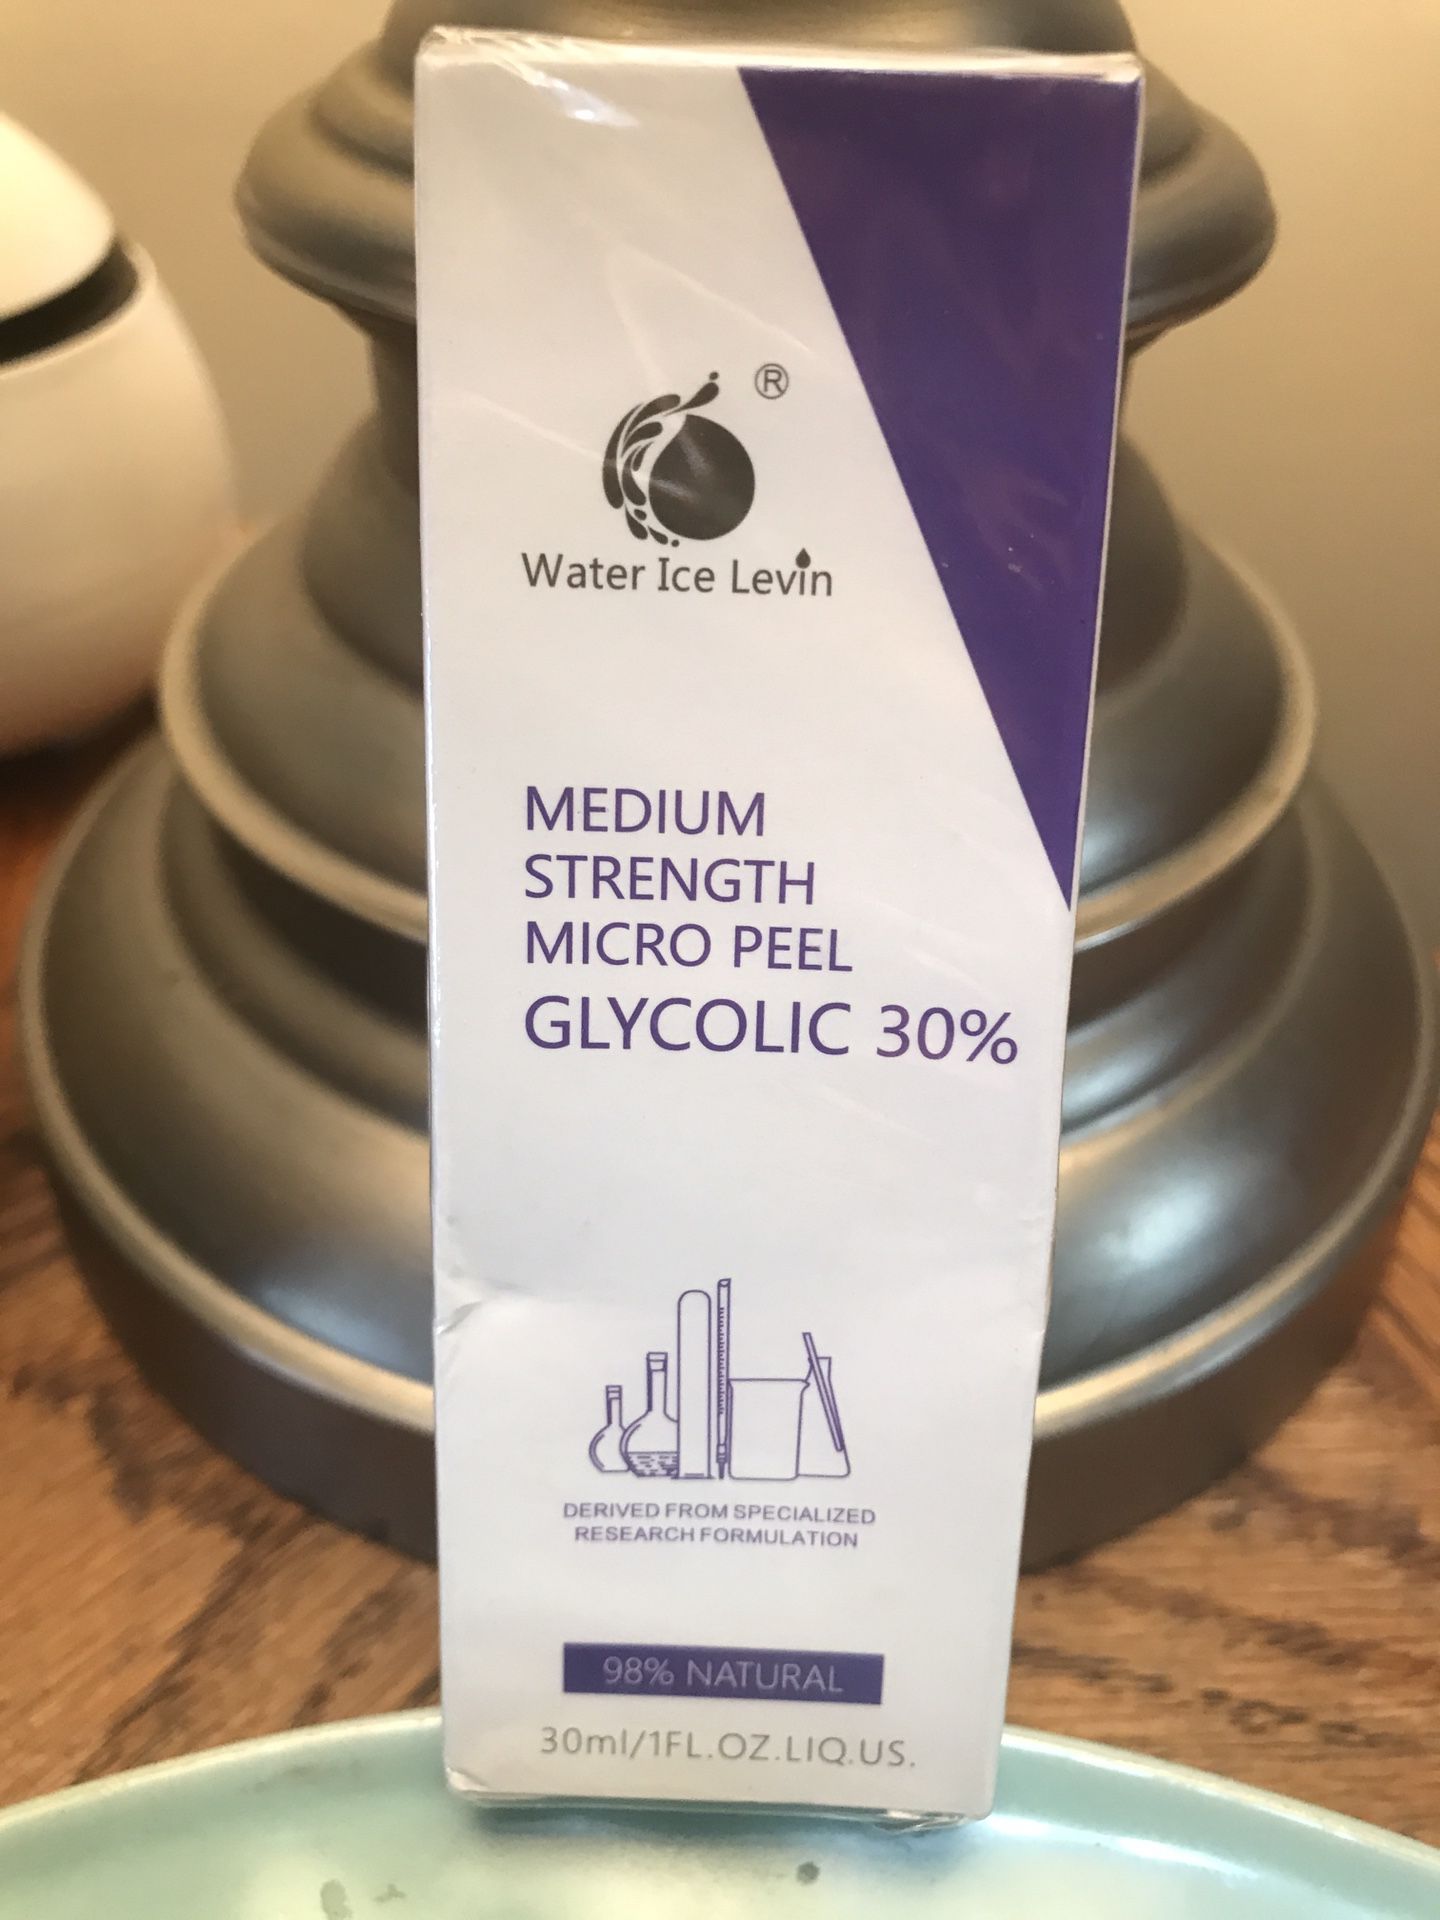 Water Ice Levin Brand 30% Glycolic Acid Micro Peel